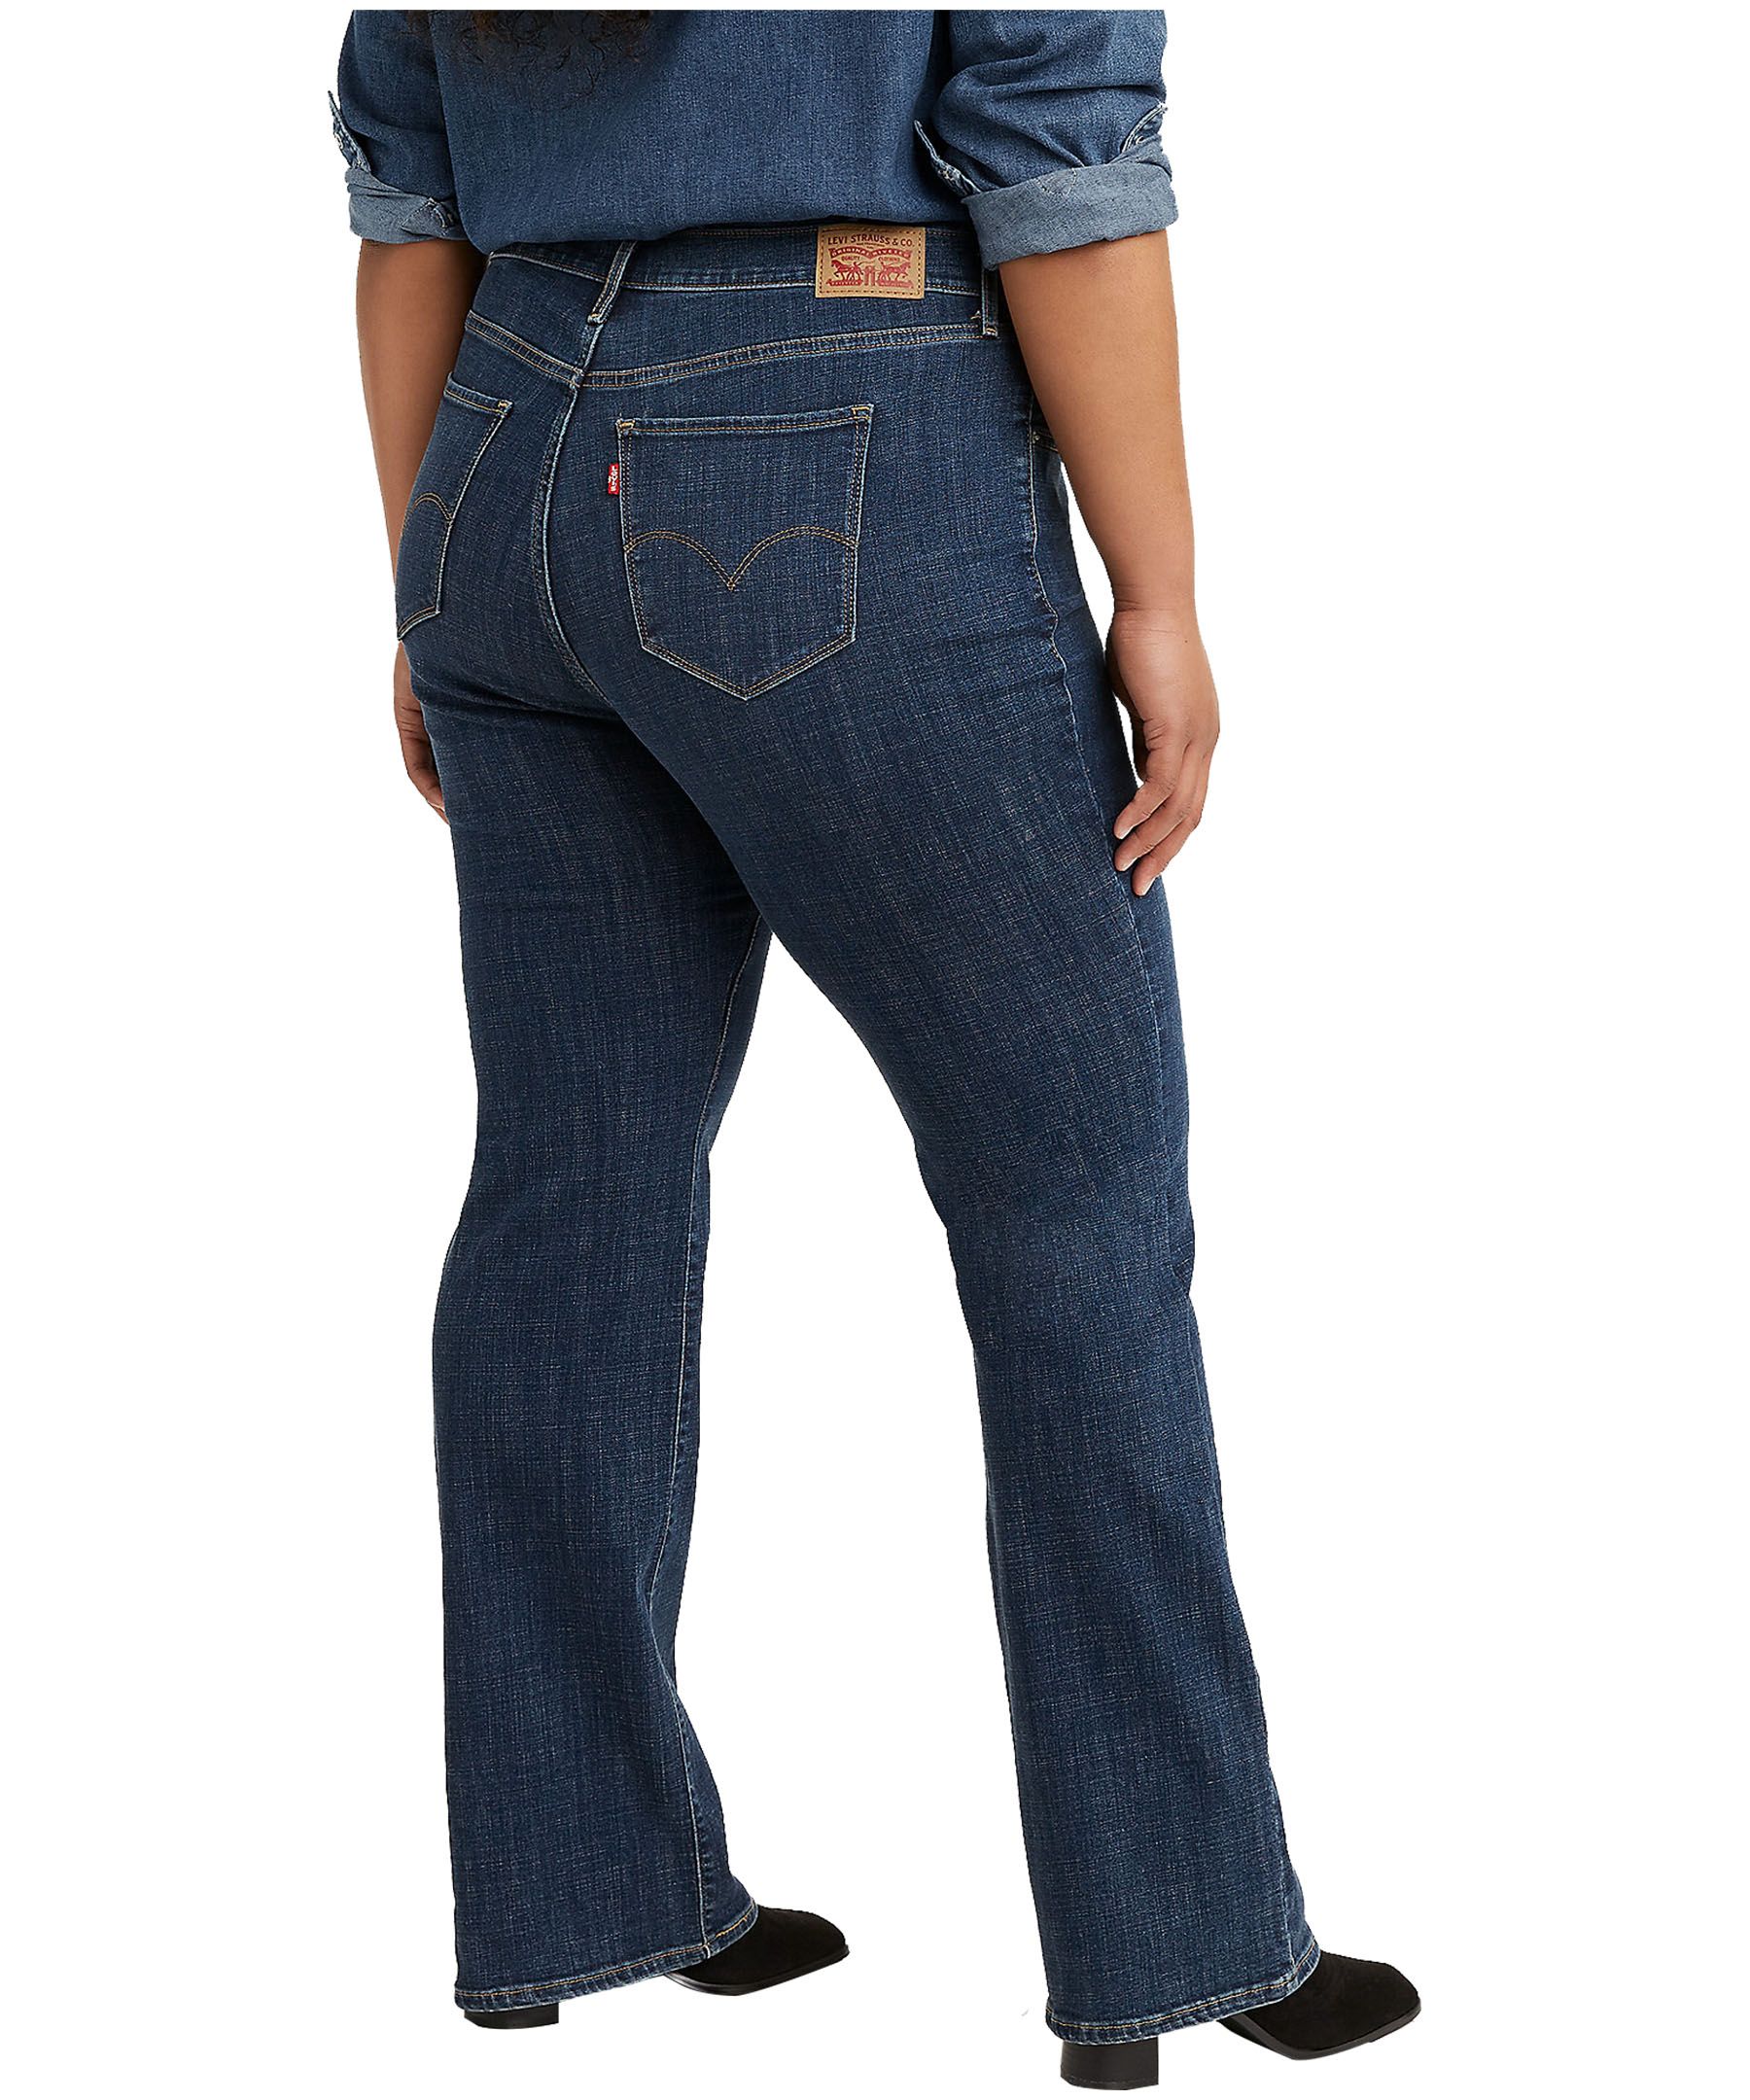 Levi's Women's 725 High Rise Bootcut Jeans - Plus Size